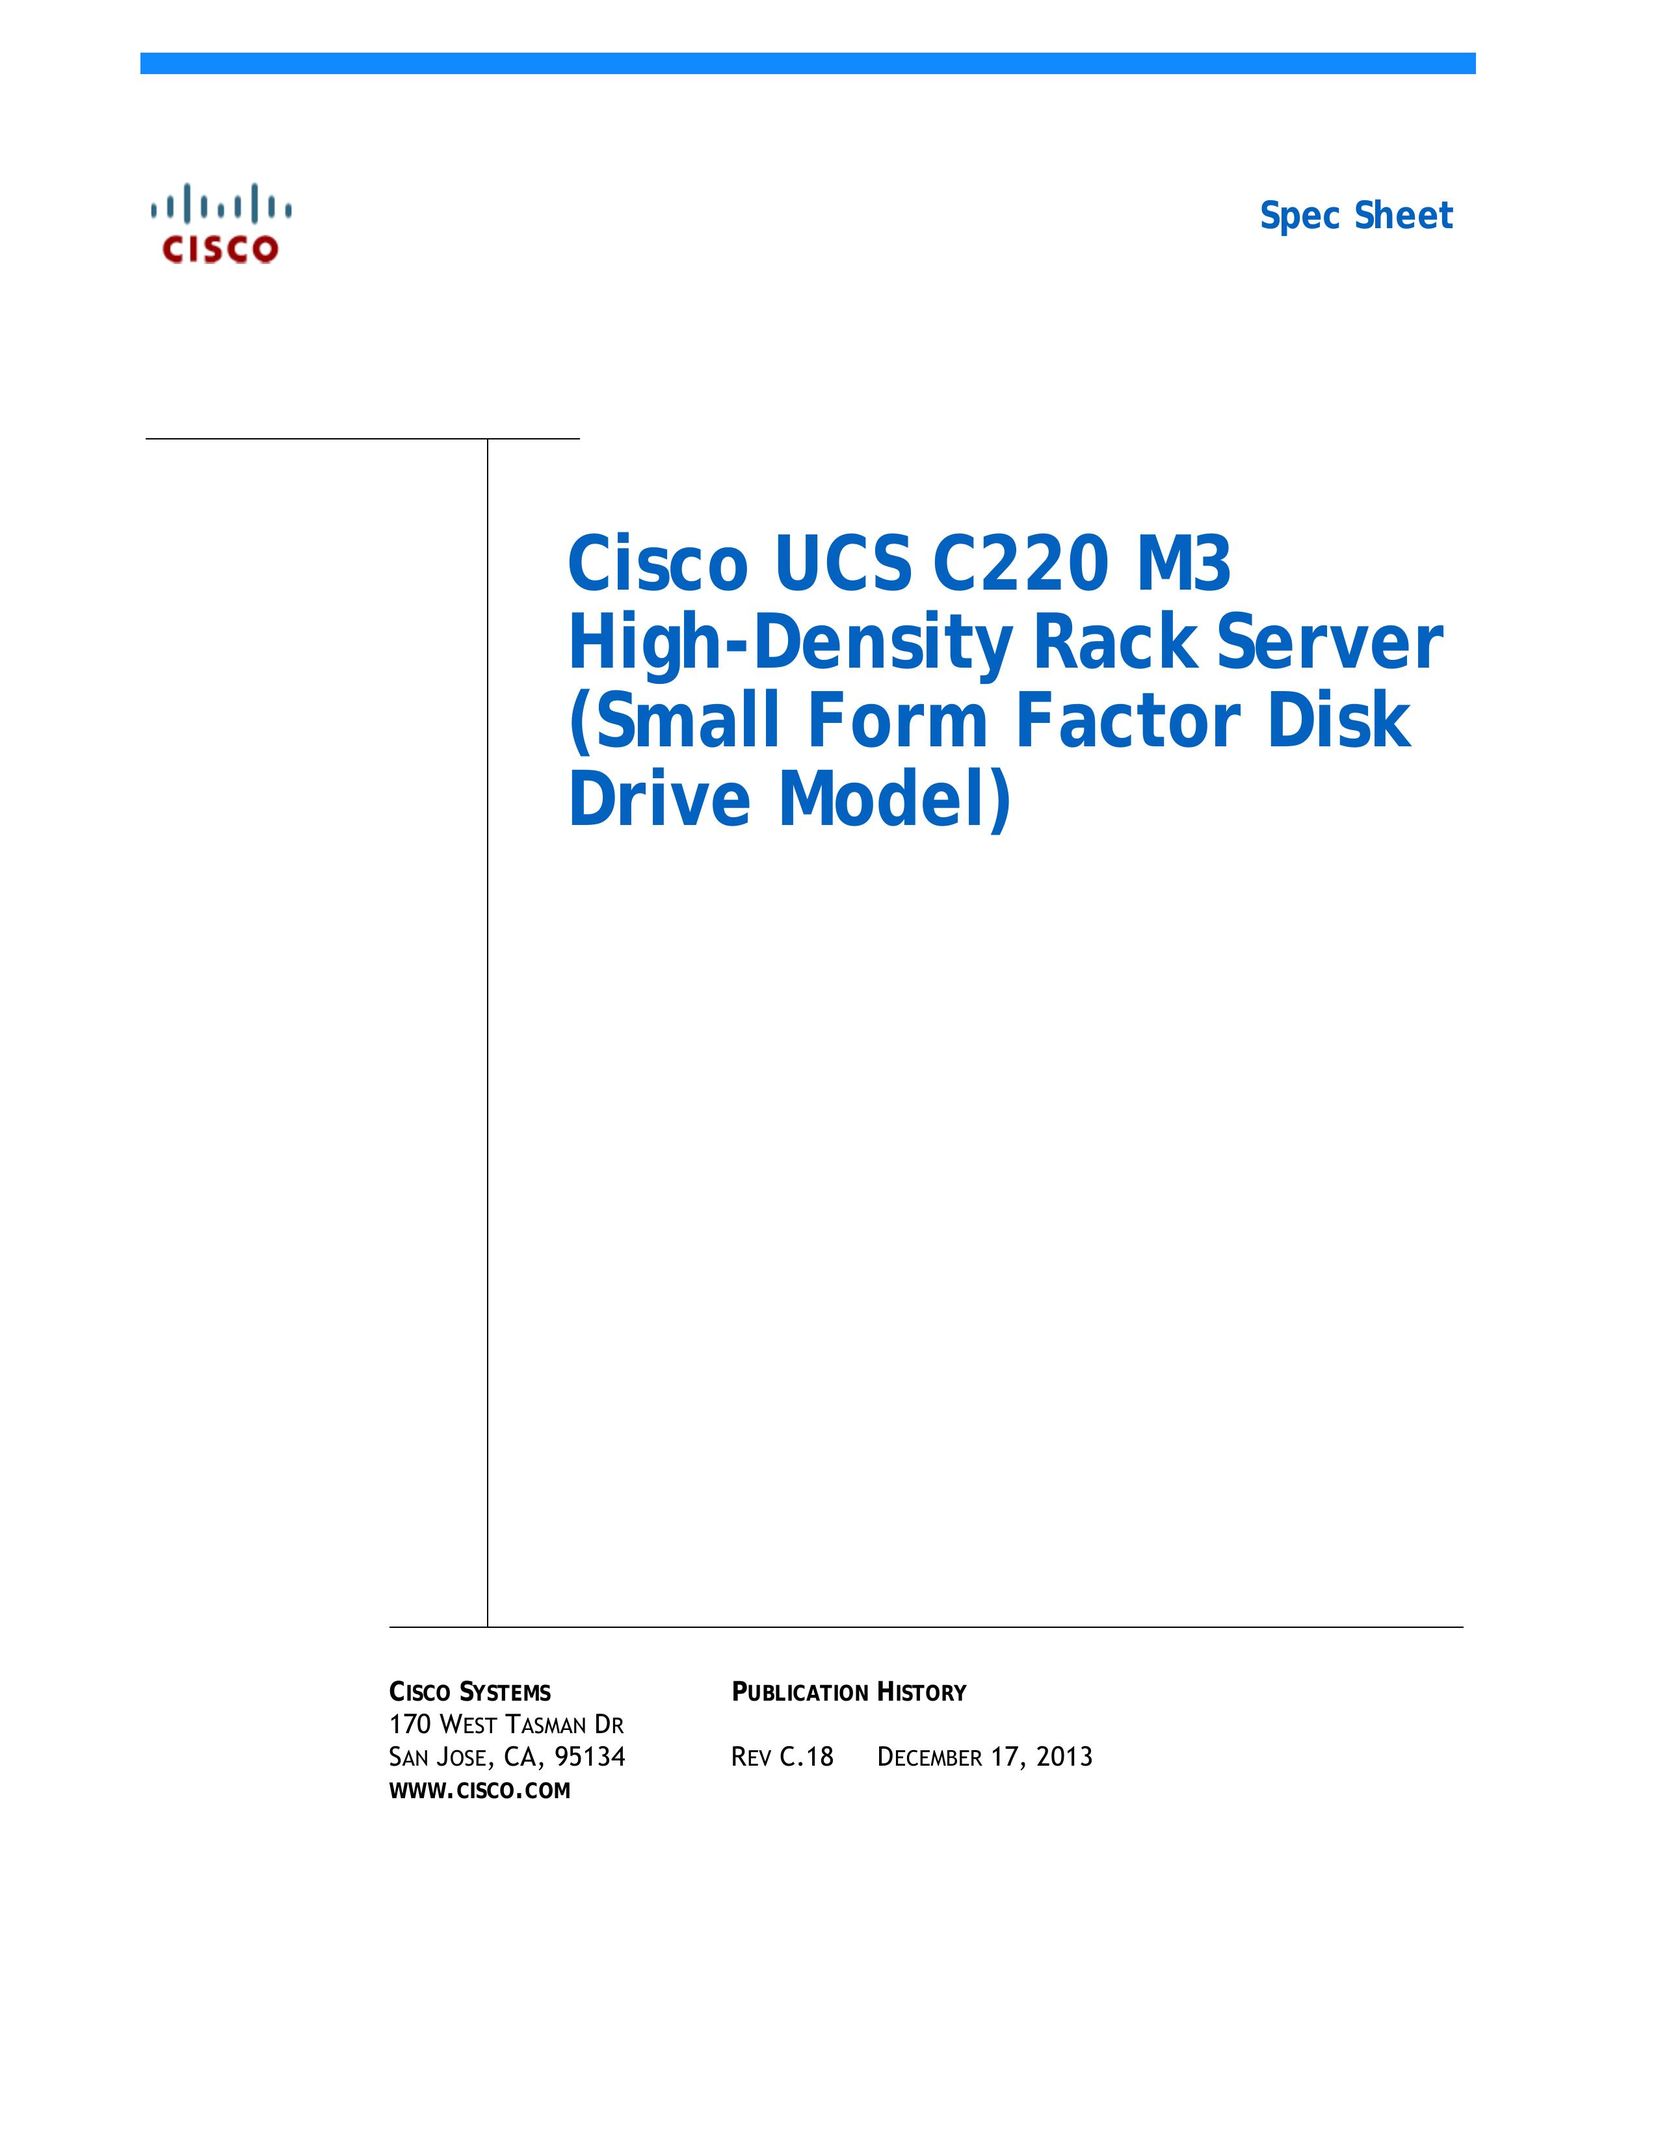 Cisco Systems A03D600GA2 Computer Drive User Manual